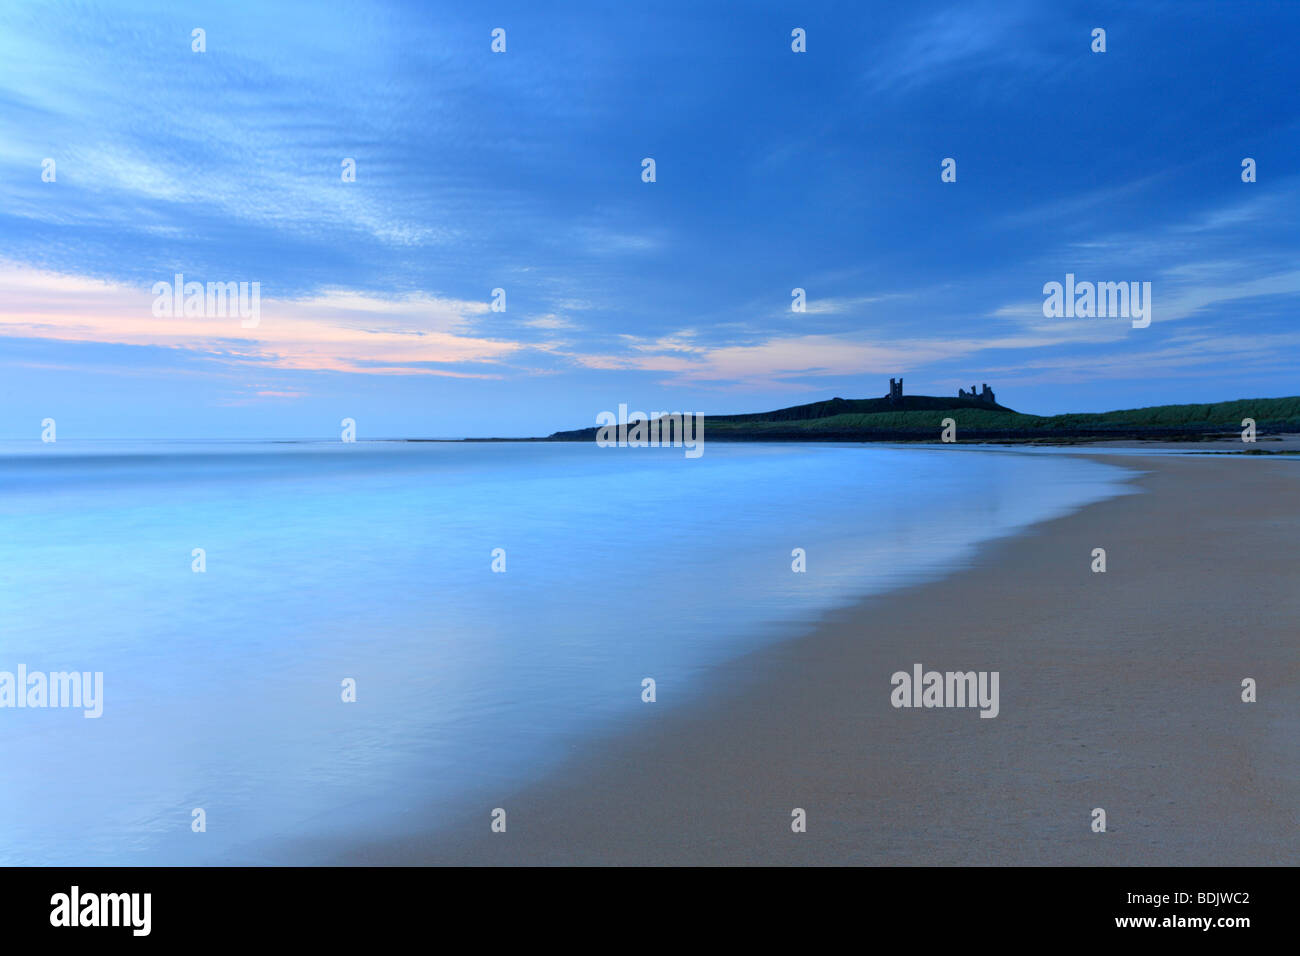 Dawn Embleton Bay, Dunstanburgh Castle on the horizon. Sunrise Northumberland coastal scene. Stock Photo